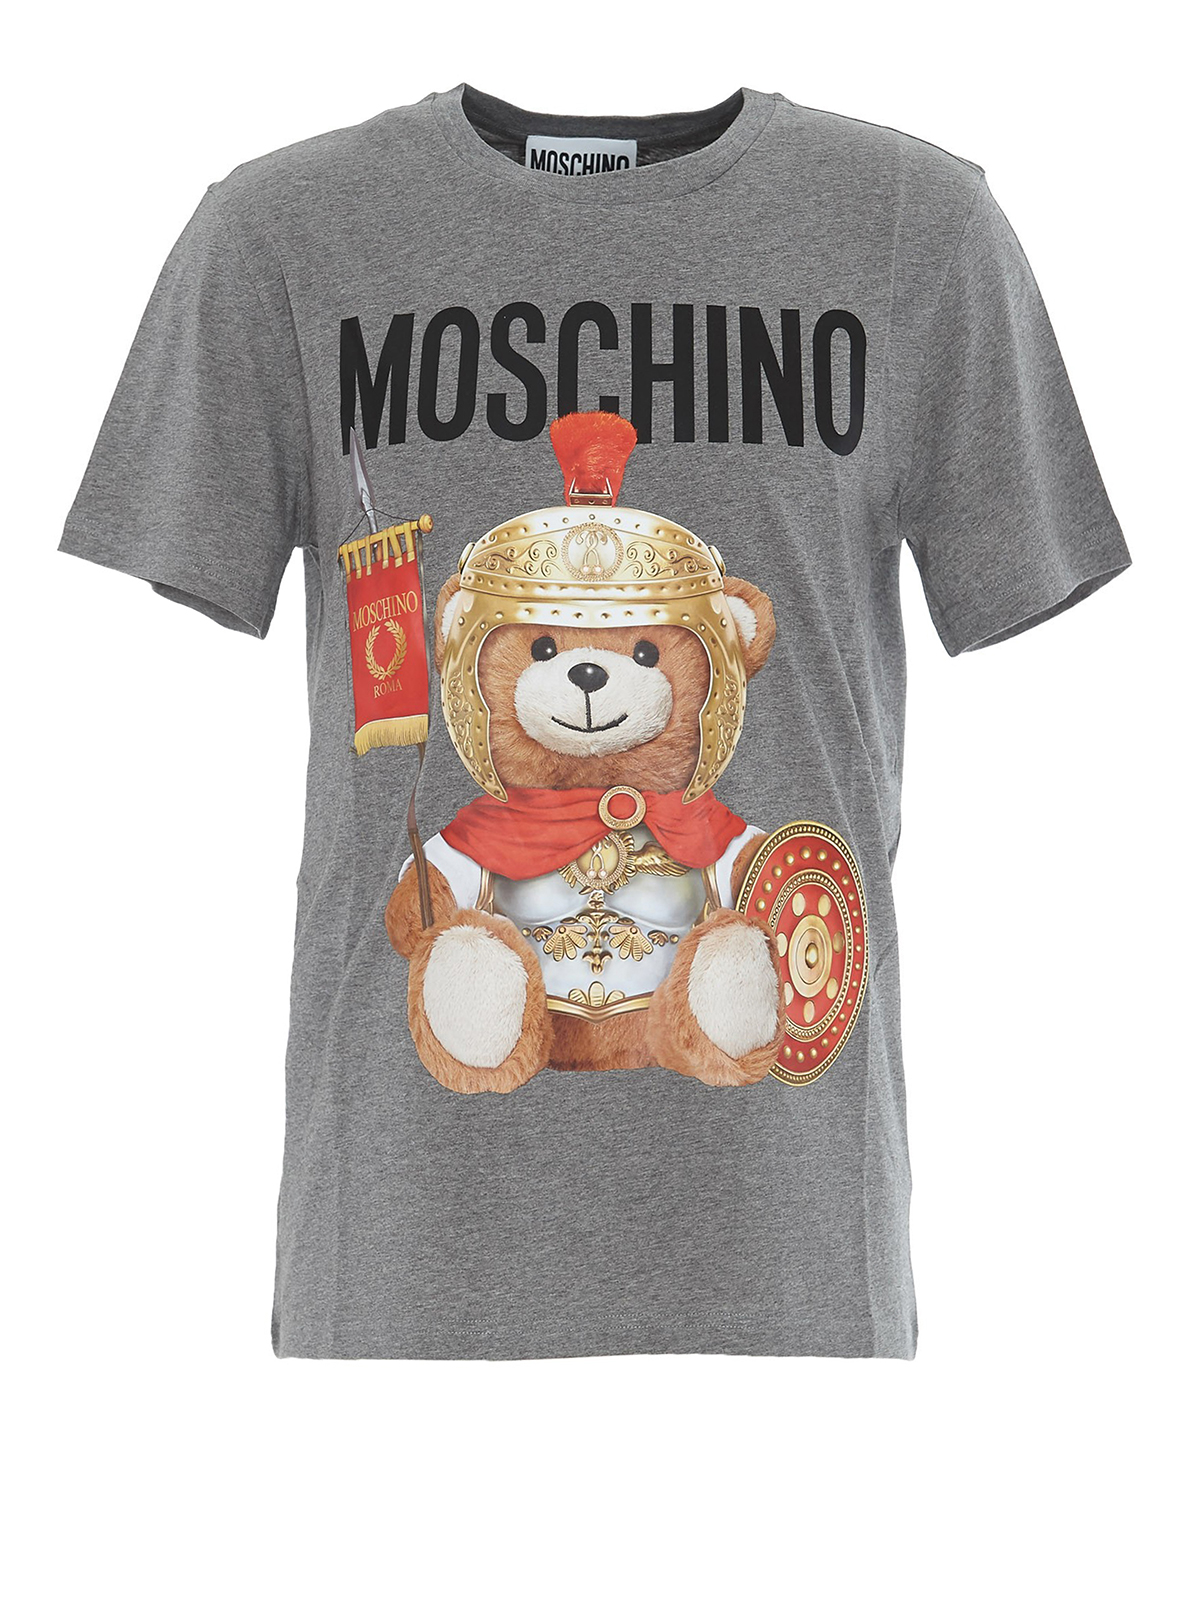 moschino monkey t shirt